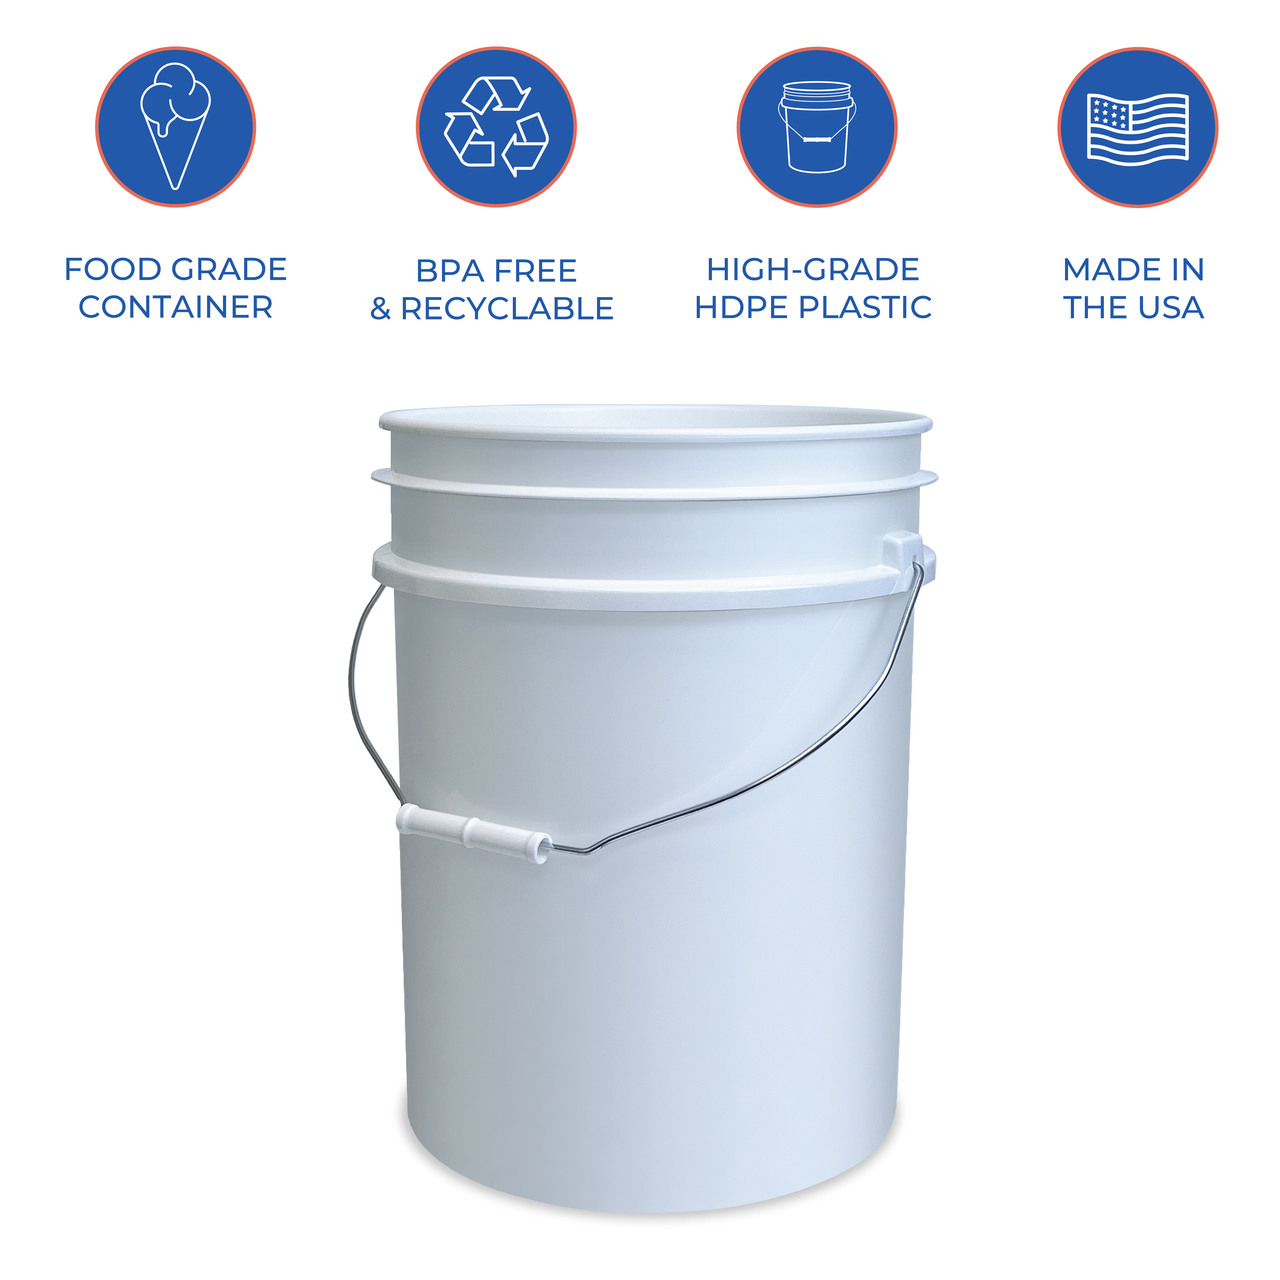 Food Service and Food Storage Buckets, Food Grade 5 Gallon Buckets